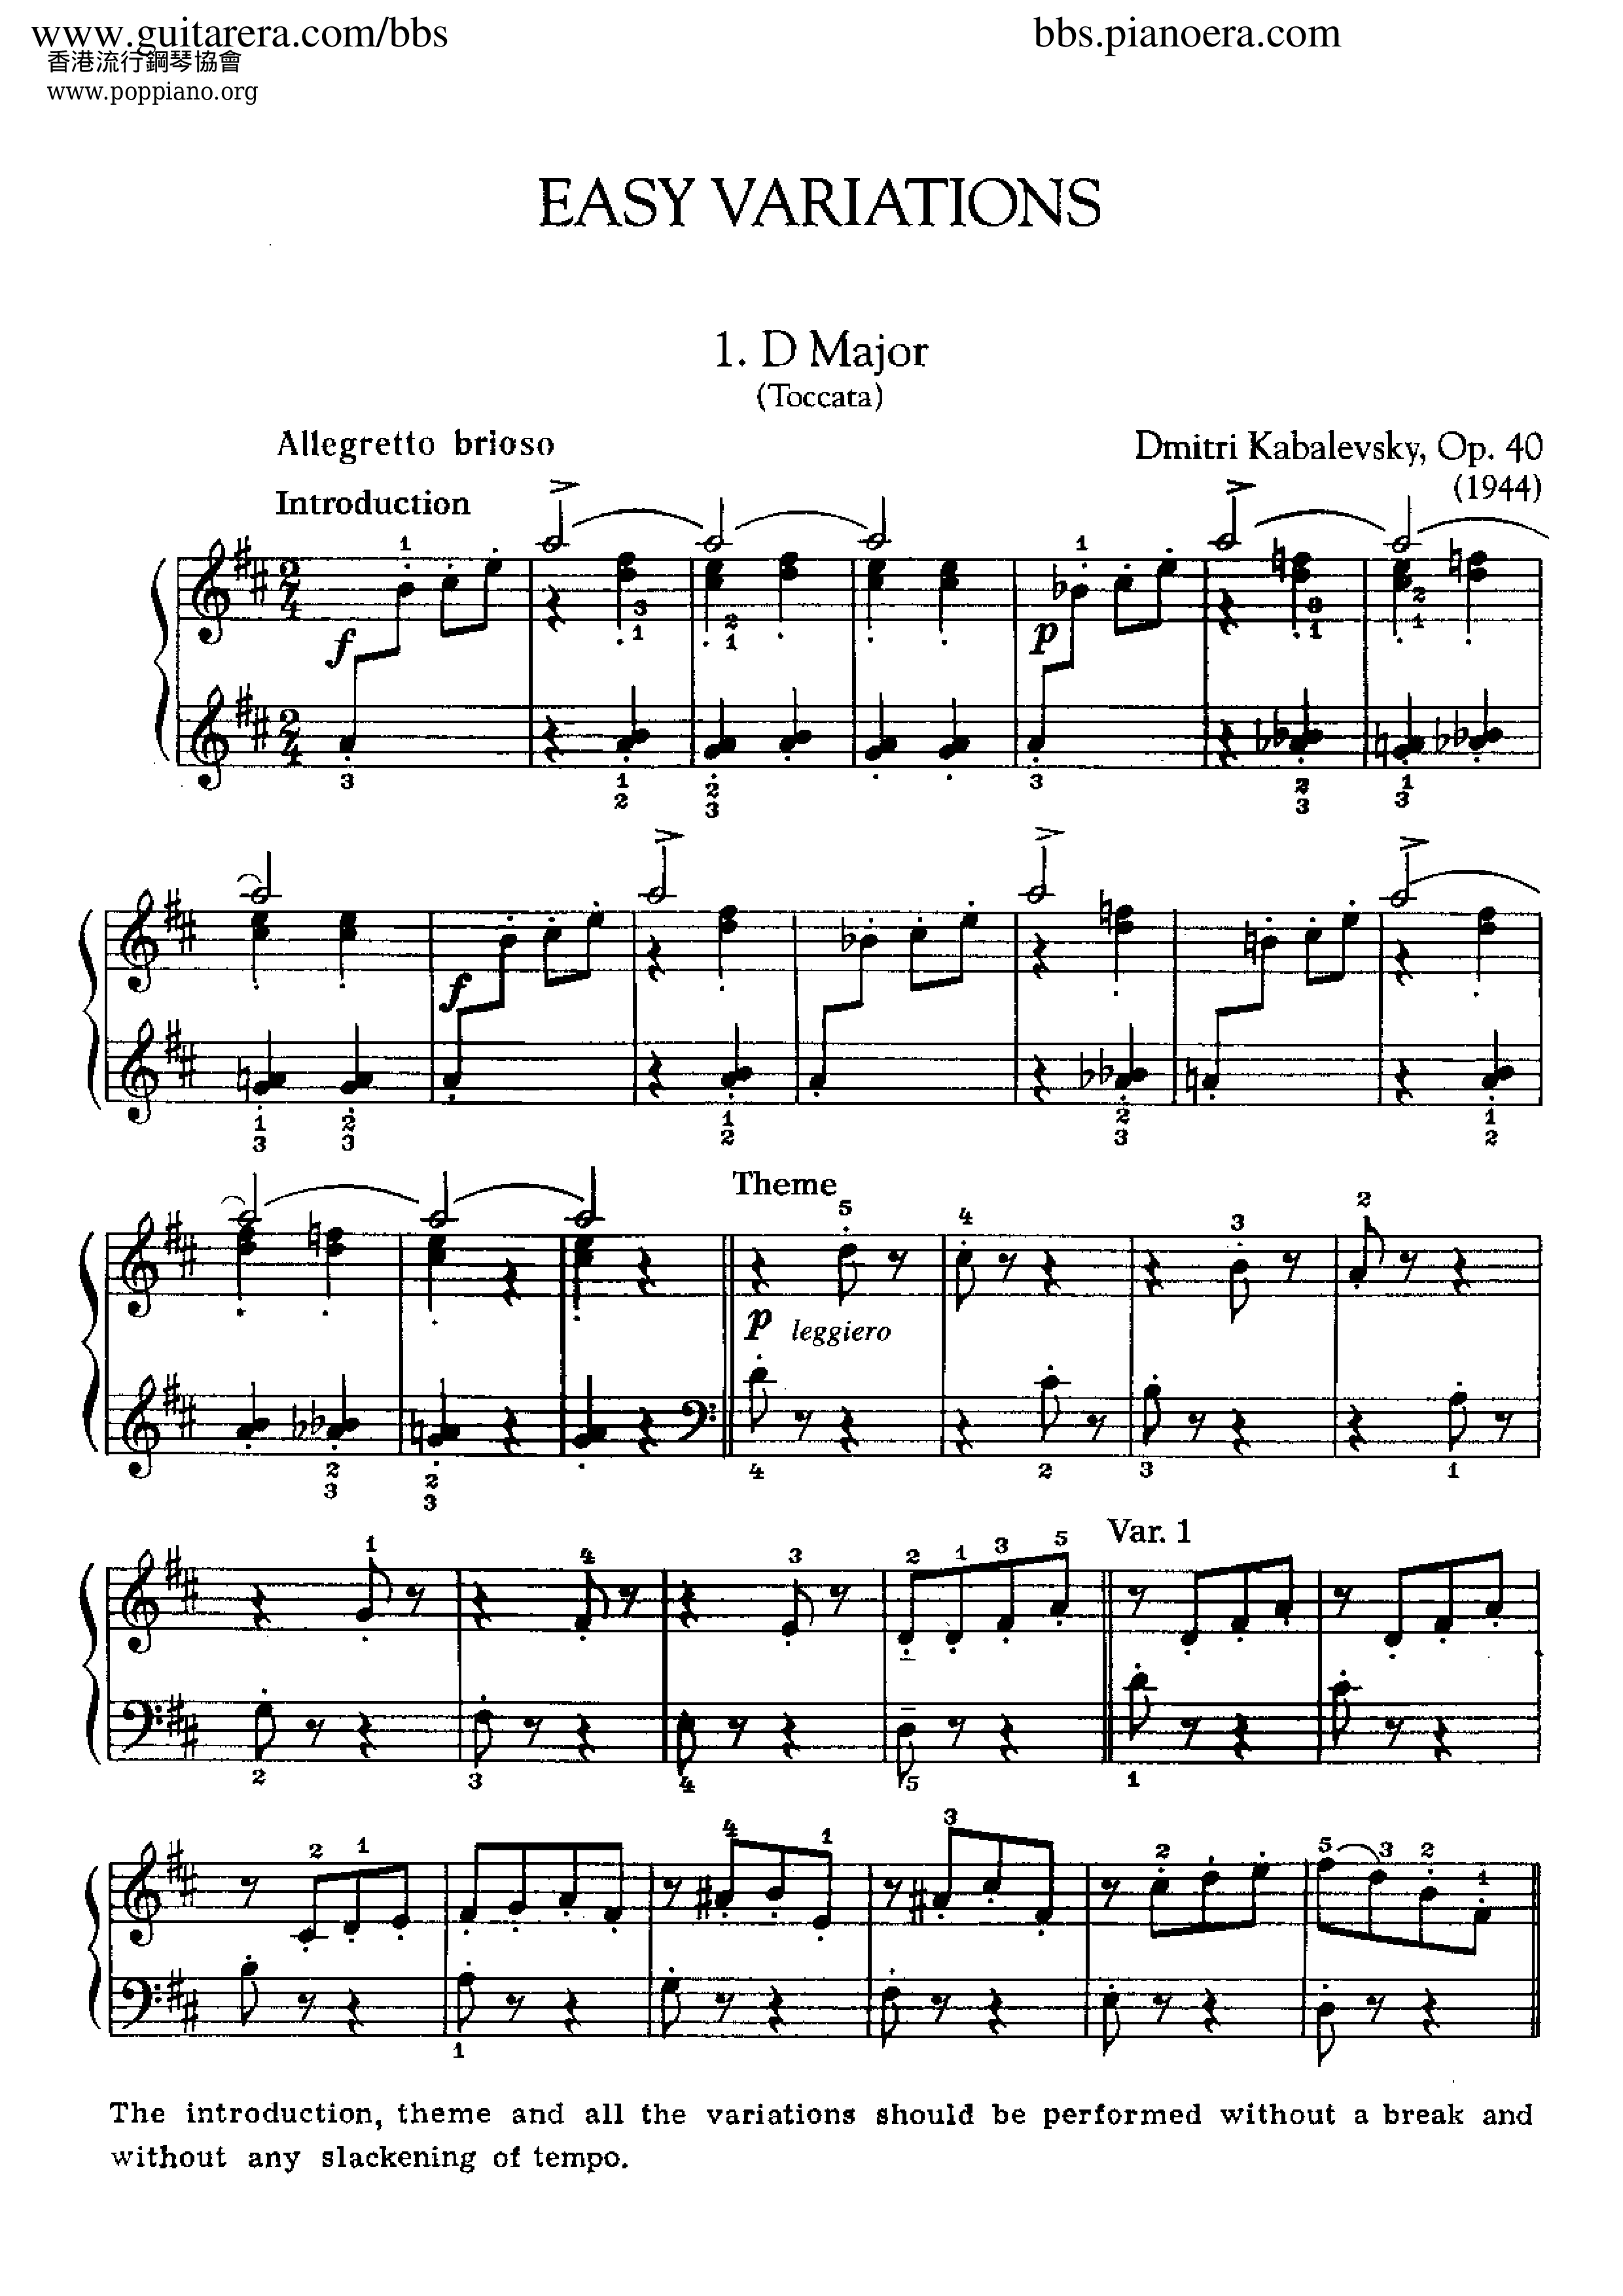 Easy Variations op. 40 in D Major琴谱